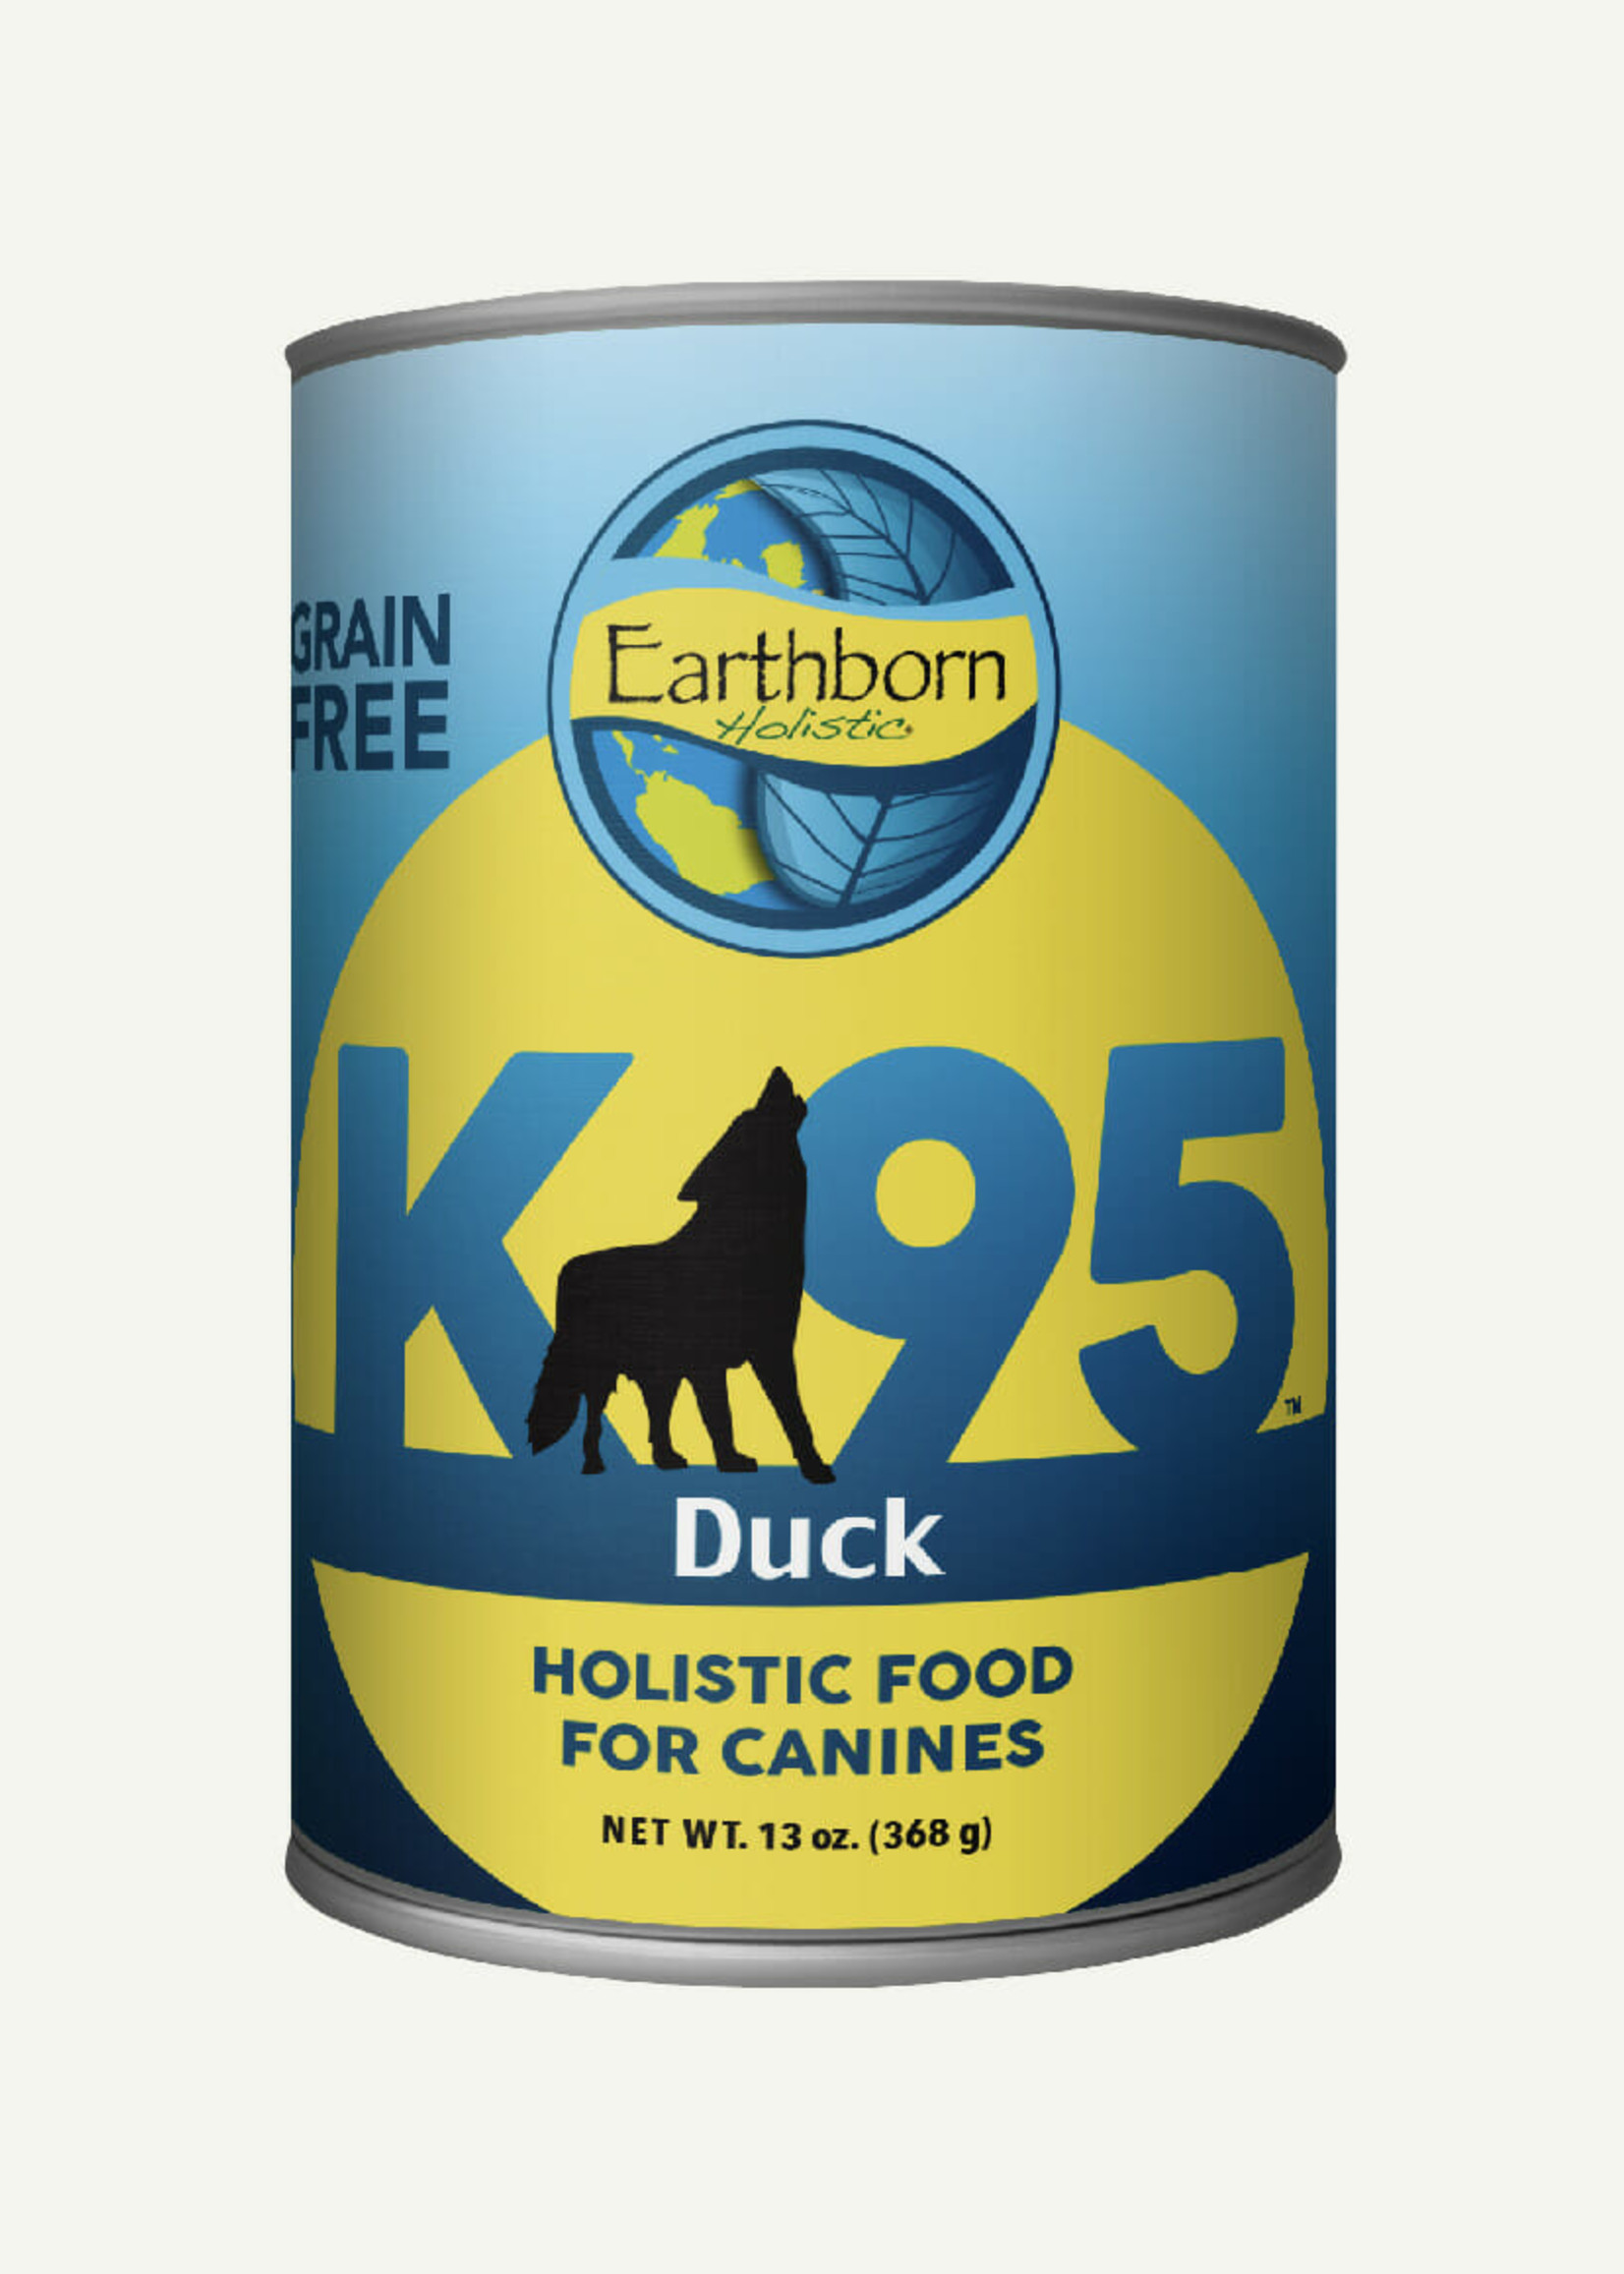 Earthborn Earthborn K95 Duck Grain Free 13 oz Case